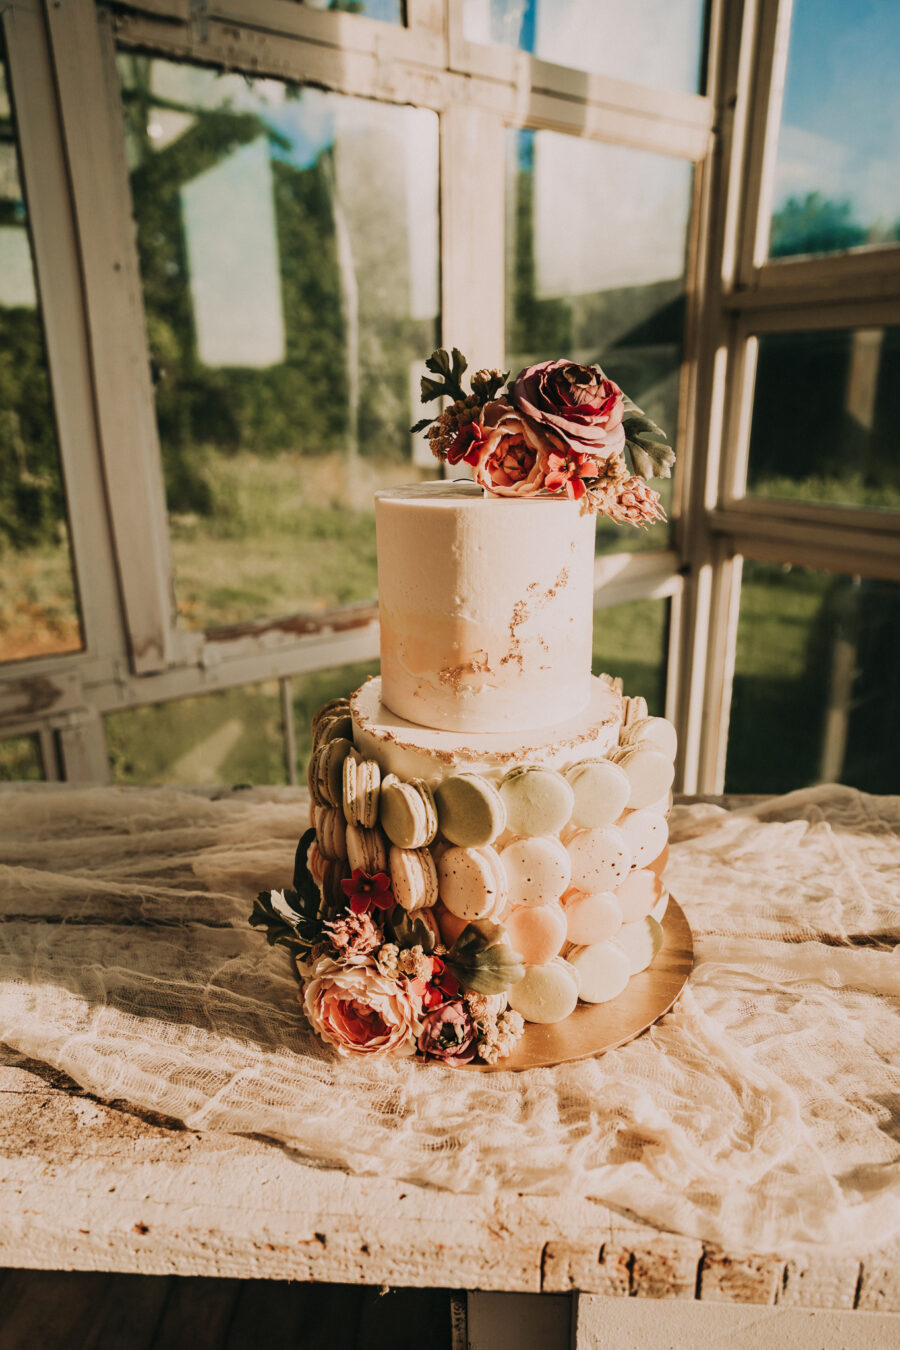 Modern wedding cake design: Flower Farm Styled Shoot by Billie-Shaye Style featured on Nashville Bride Guide